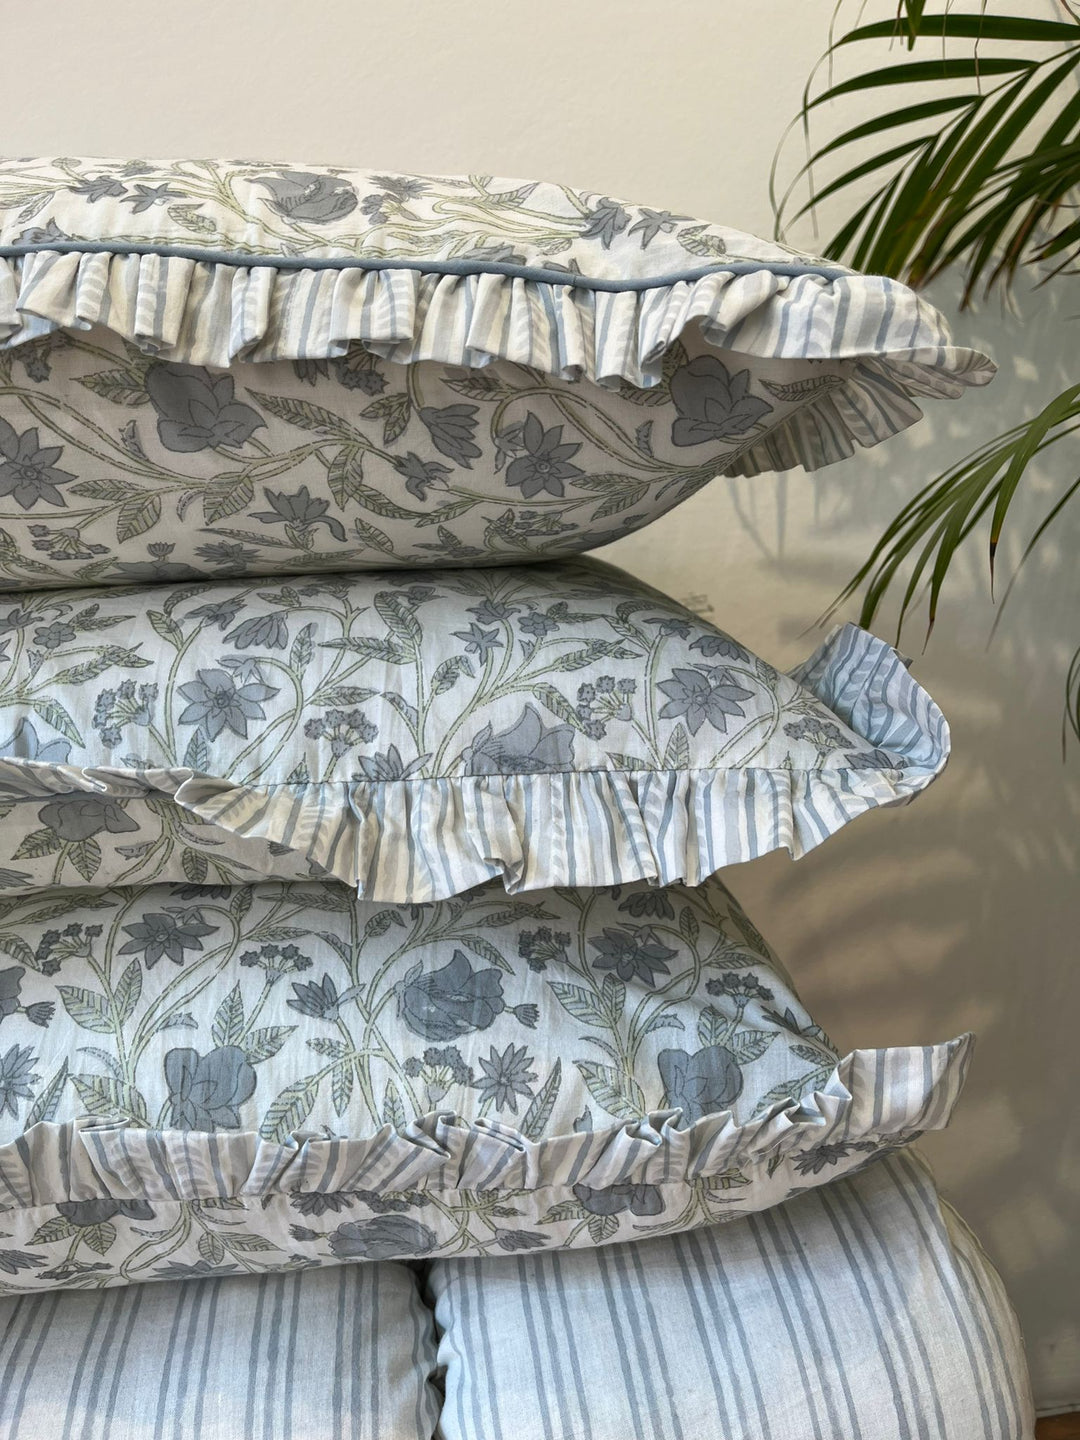 Joshi Ruffle Cushion Cover in Grey and White